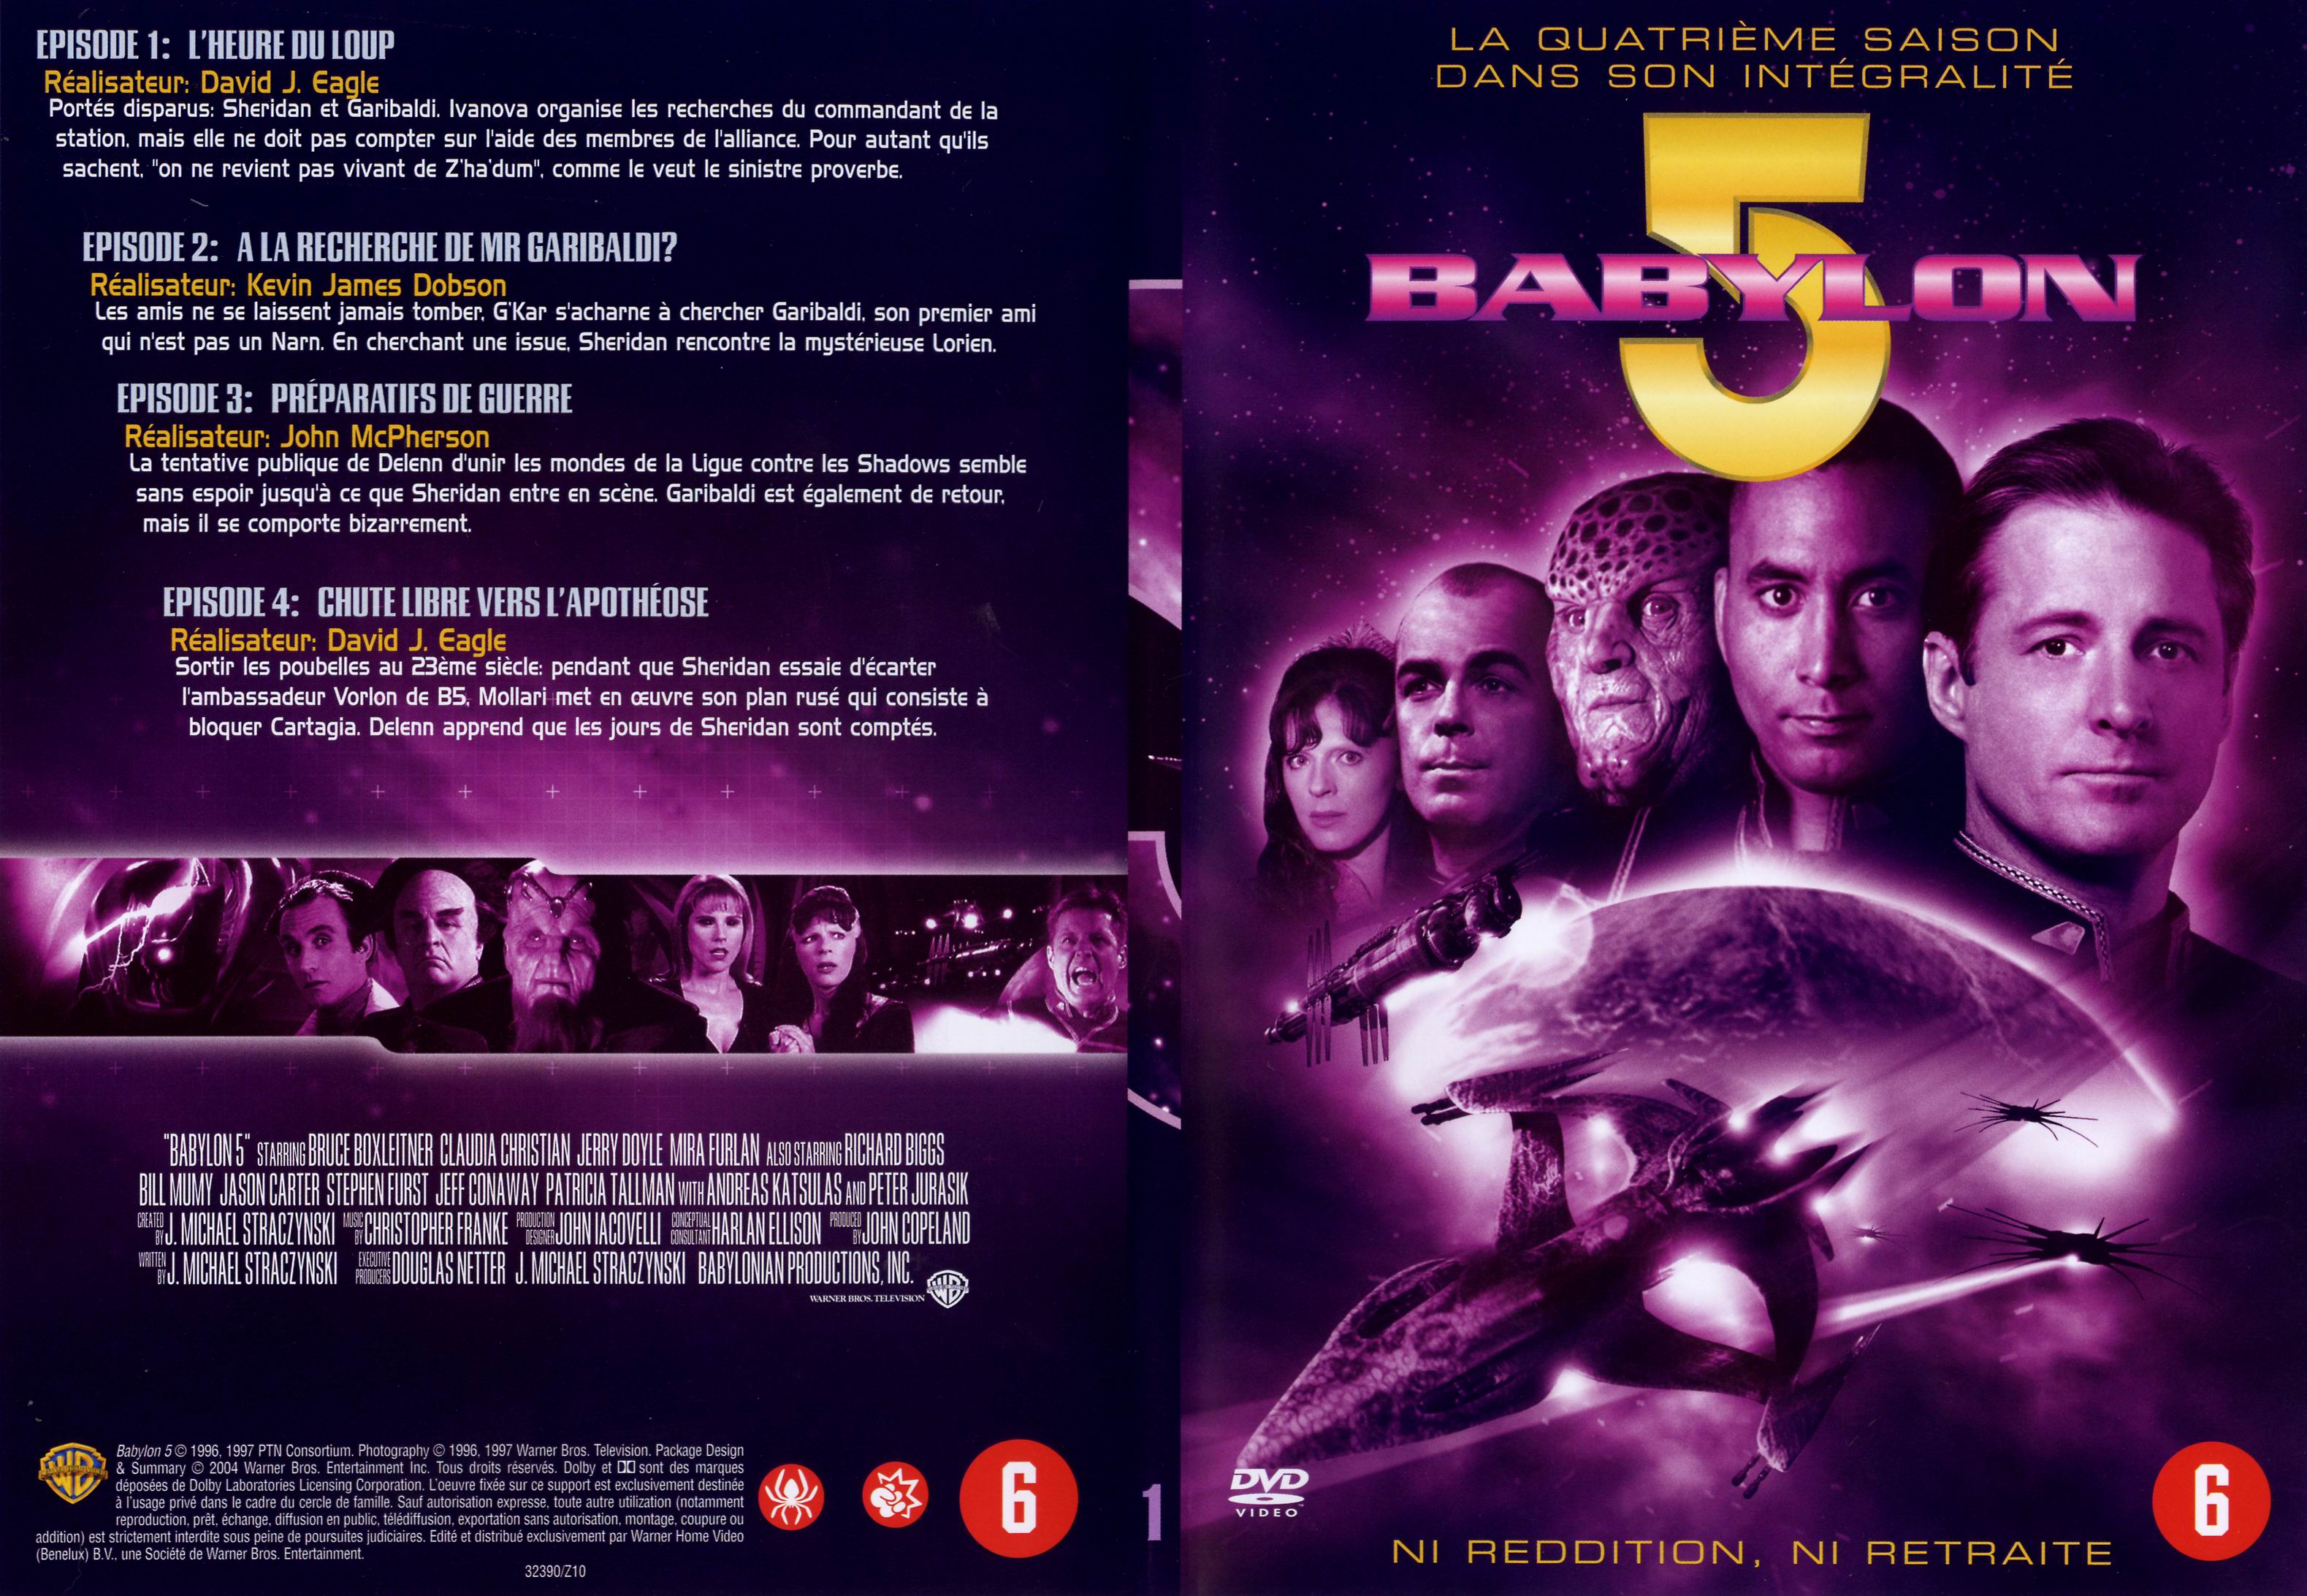 Jaquette DVD Babylon 5 saison 4 dvd 1